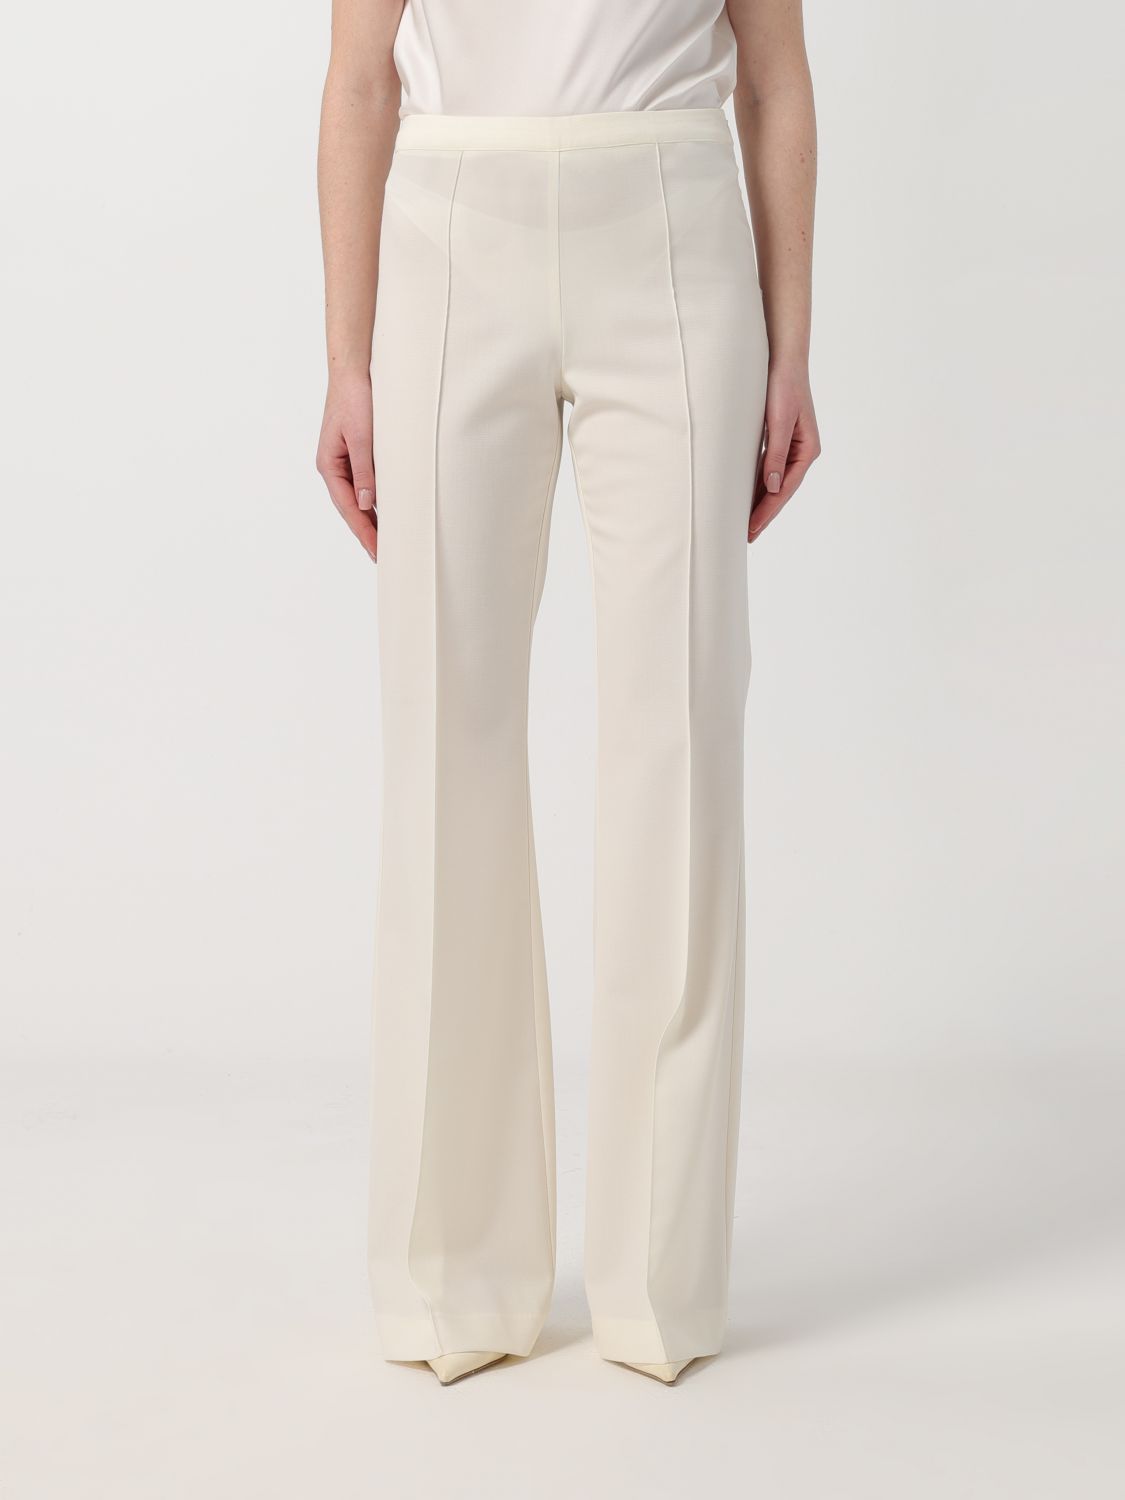 Erika Cavallini Pants  Woman Color White